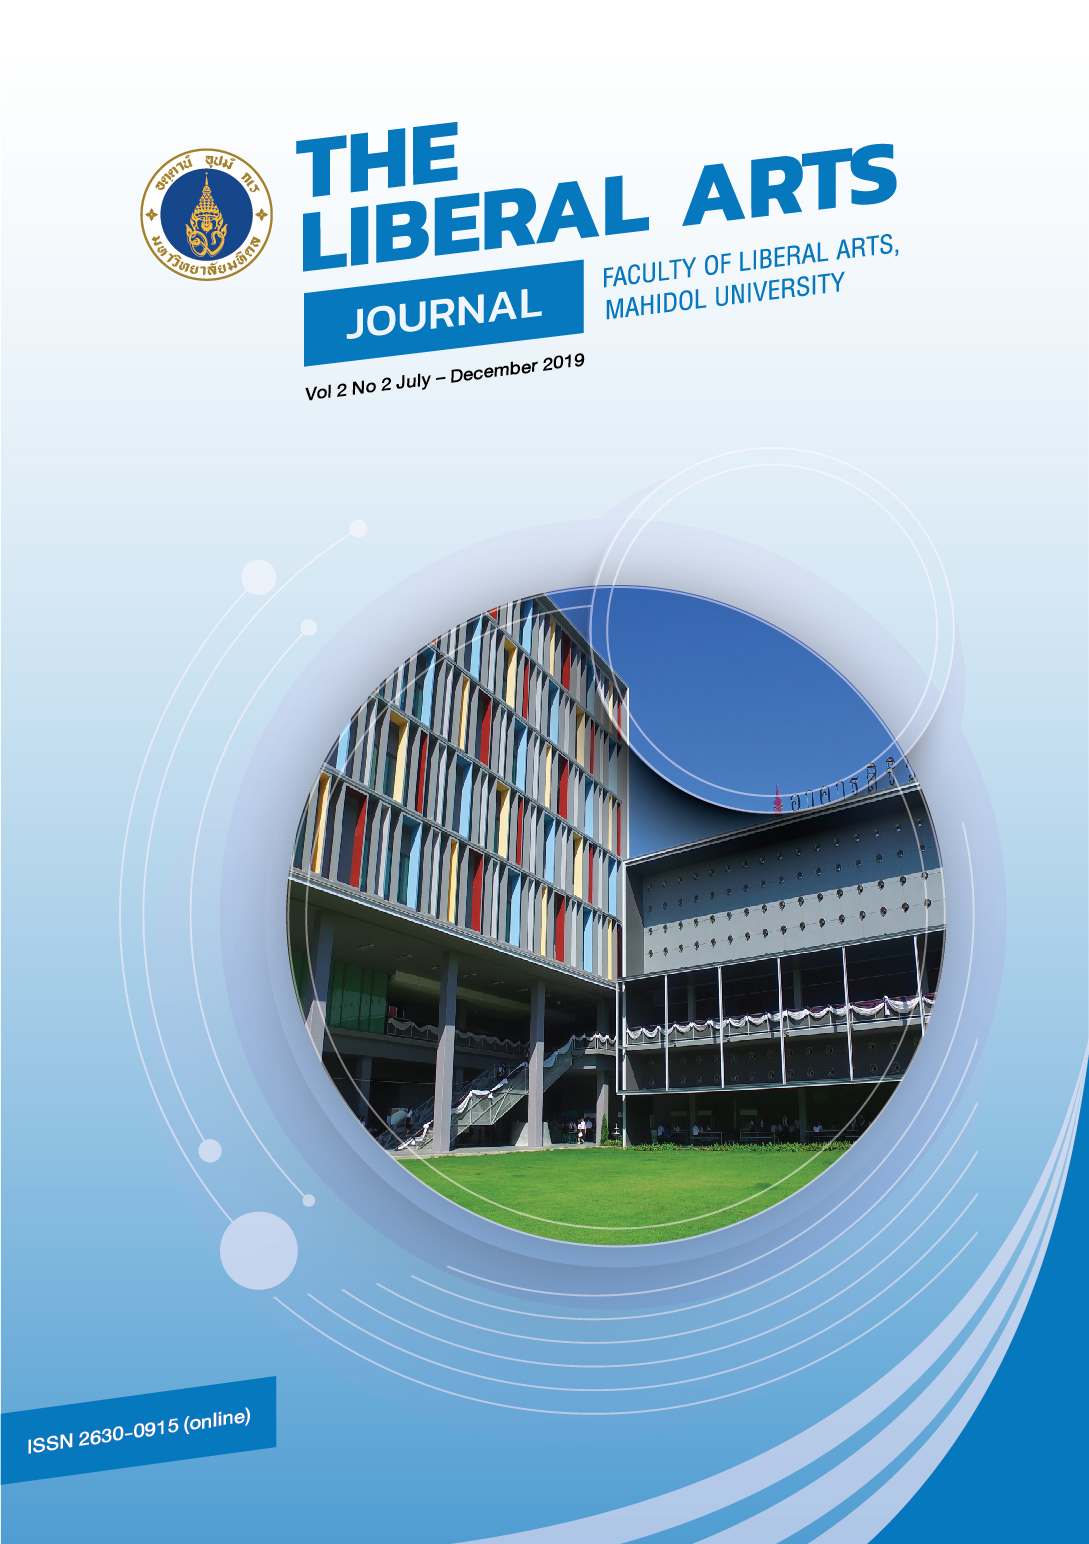 					View Vol. 2 No. 2 (2019): The Liberal Arts Journal, Mahidol University
				